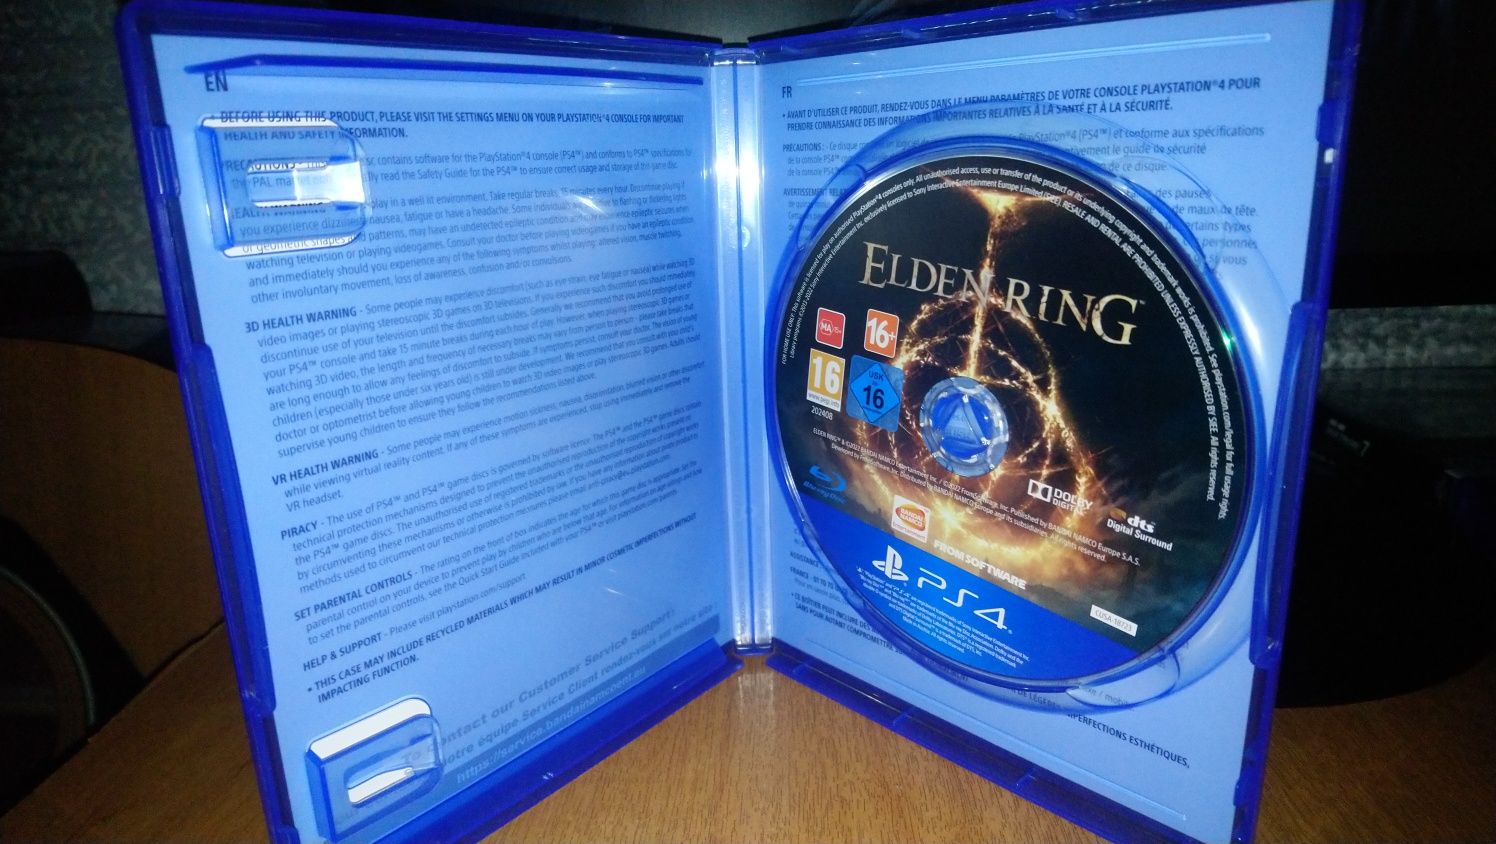 Elden ring для Playstation 4 и Playstation 5